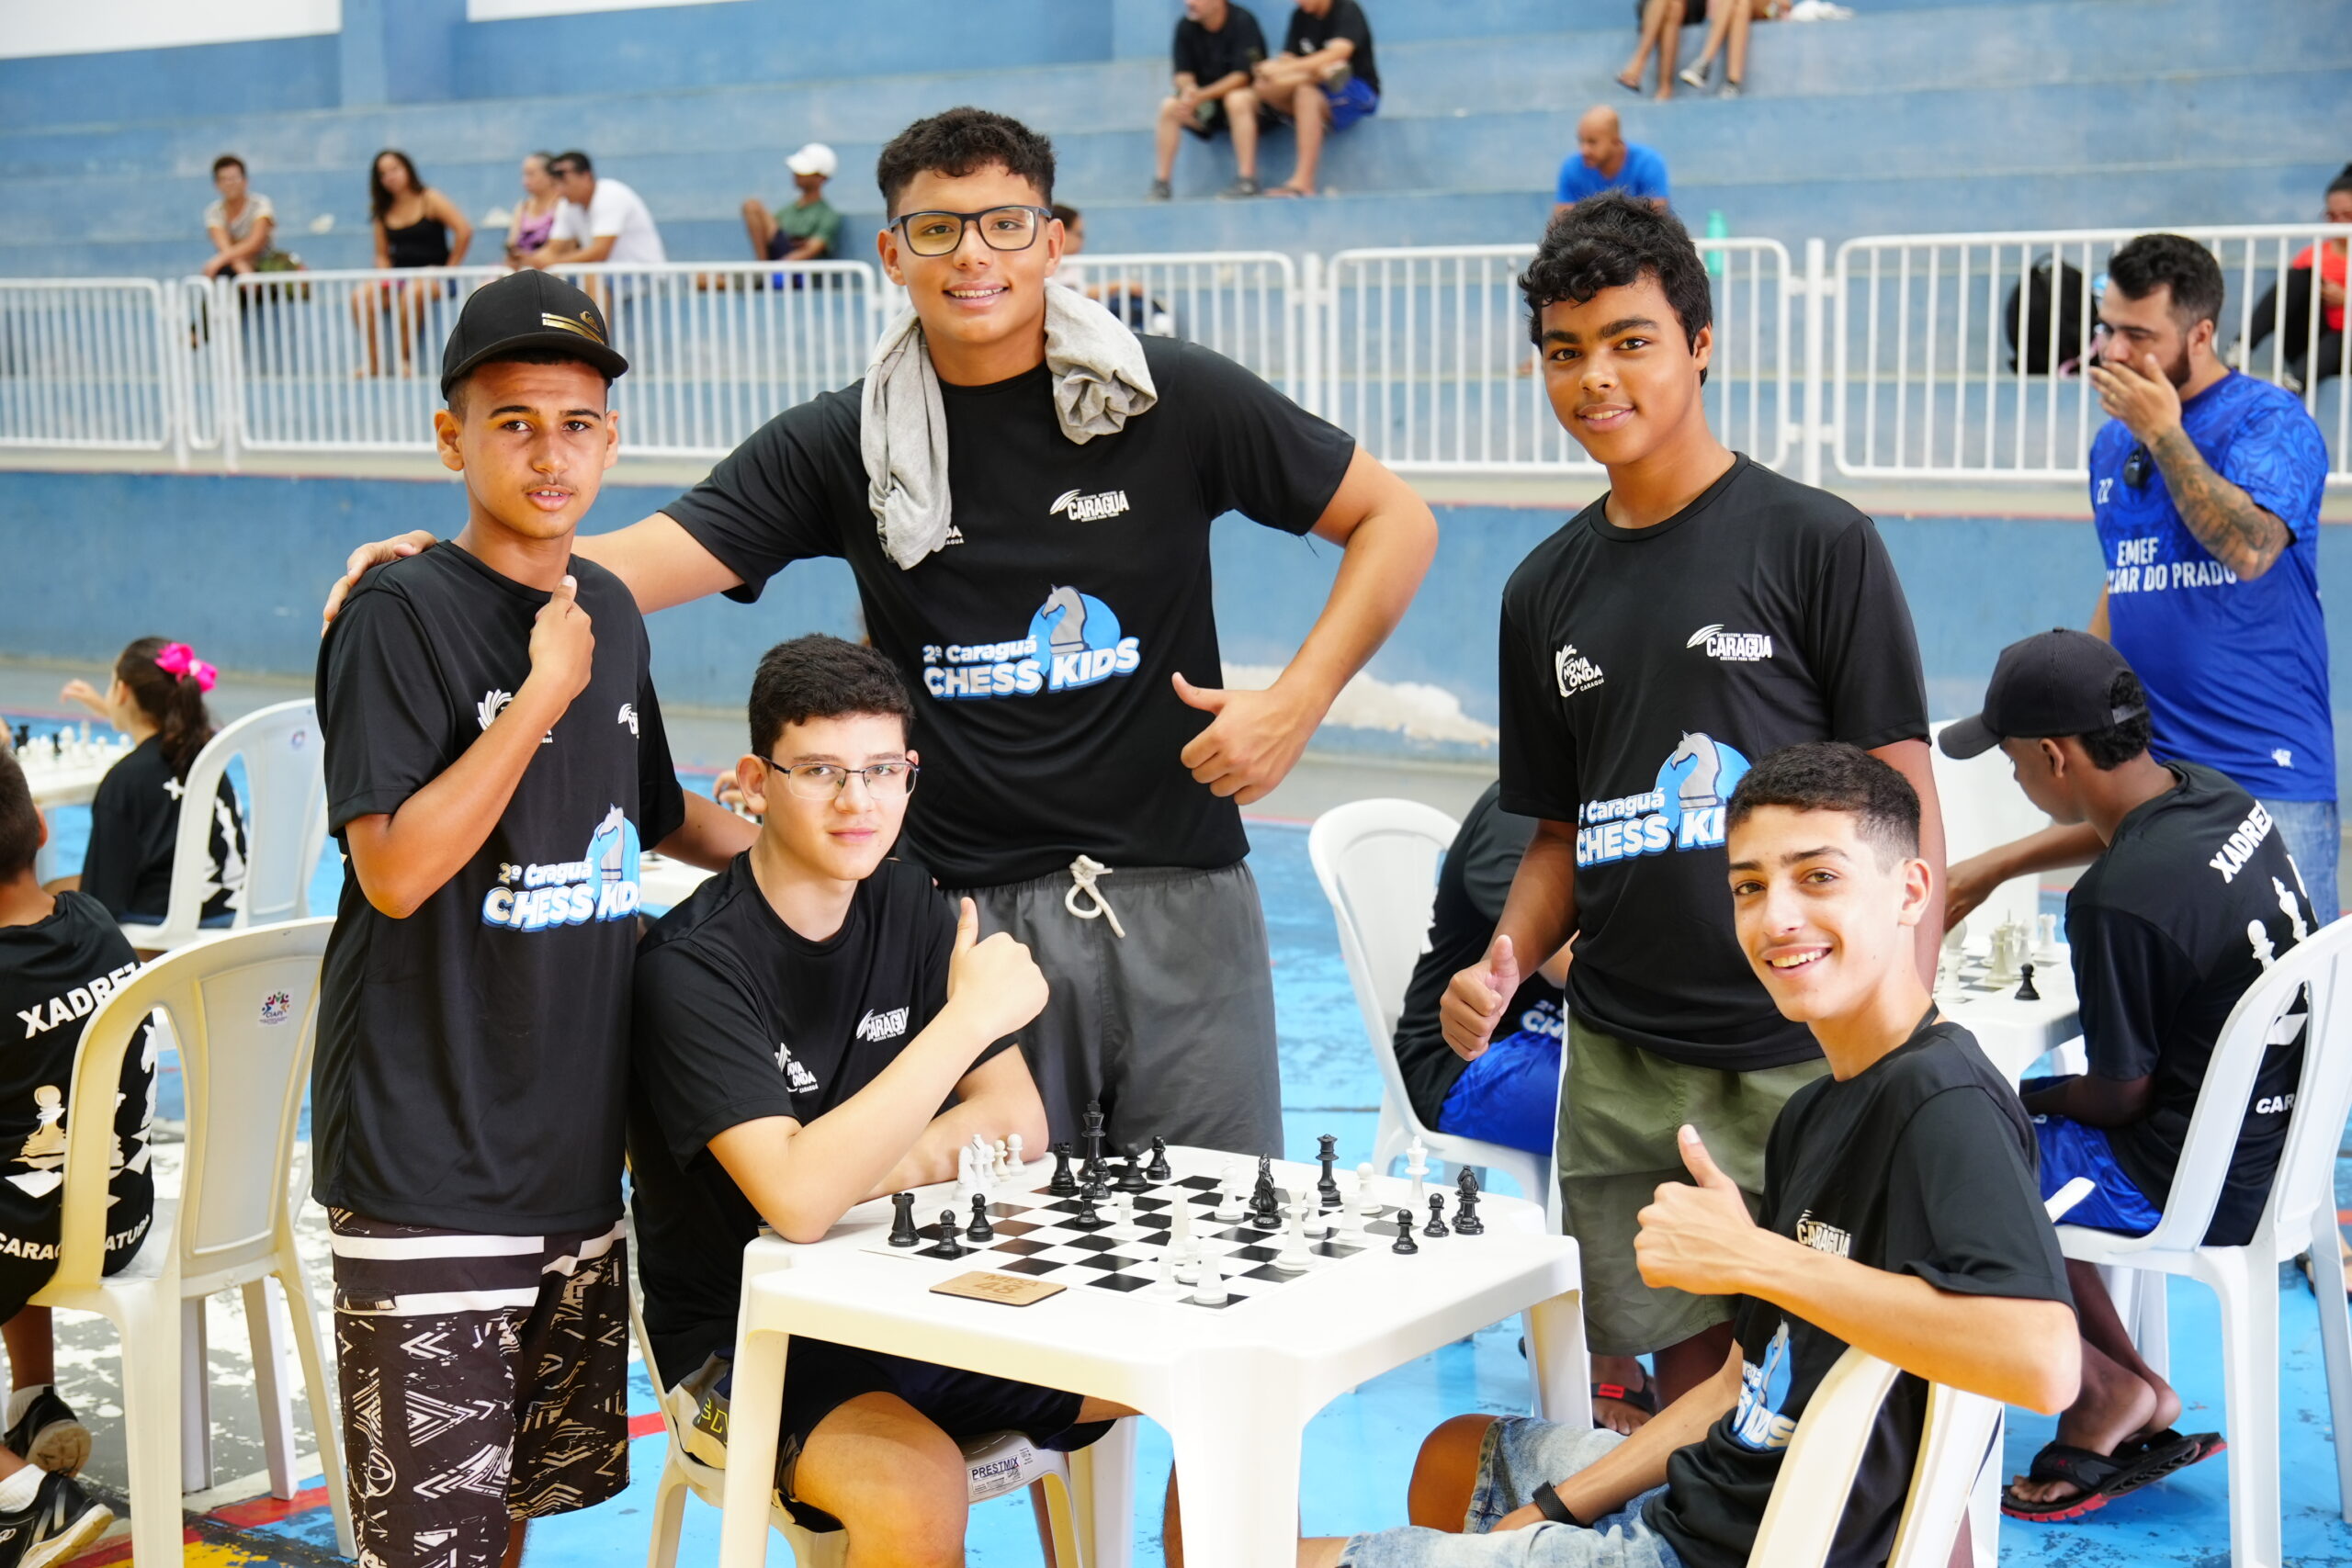 Colégio Almeida Júnior oferece aulas de xadrez aos alunos